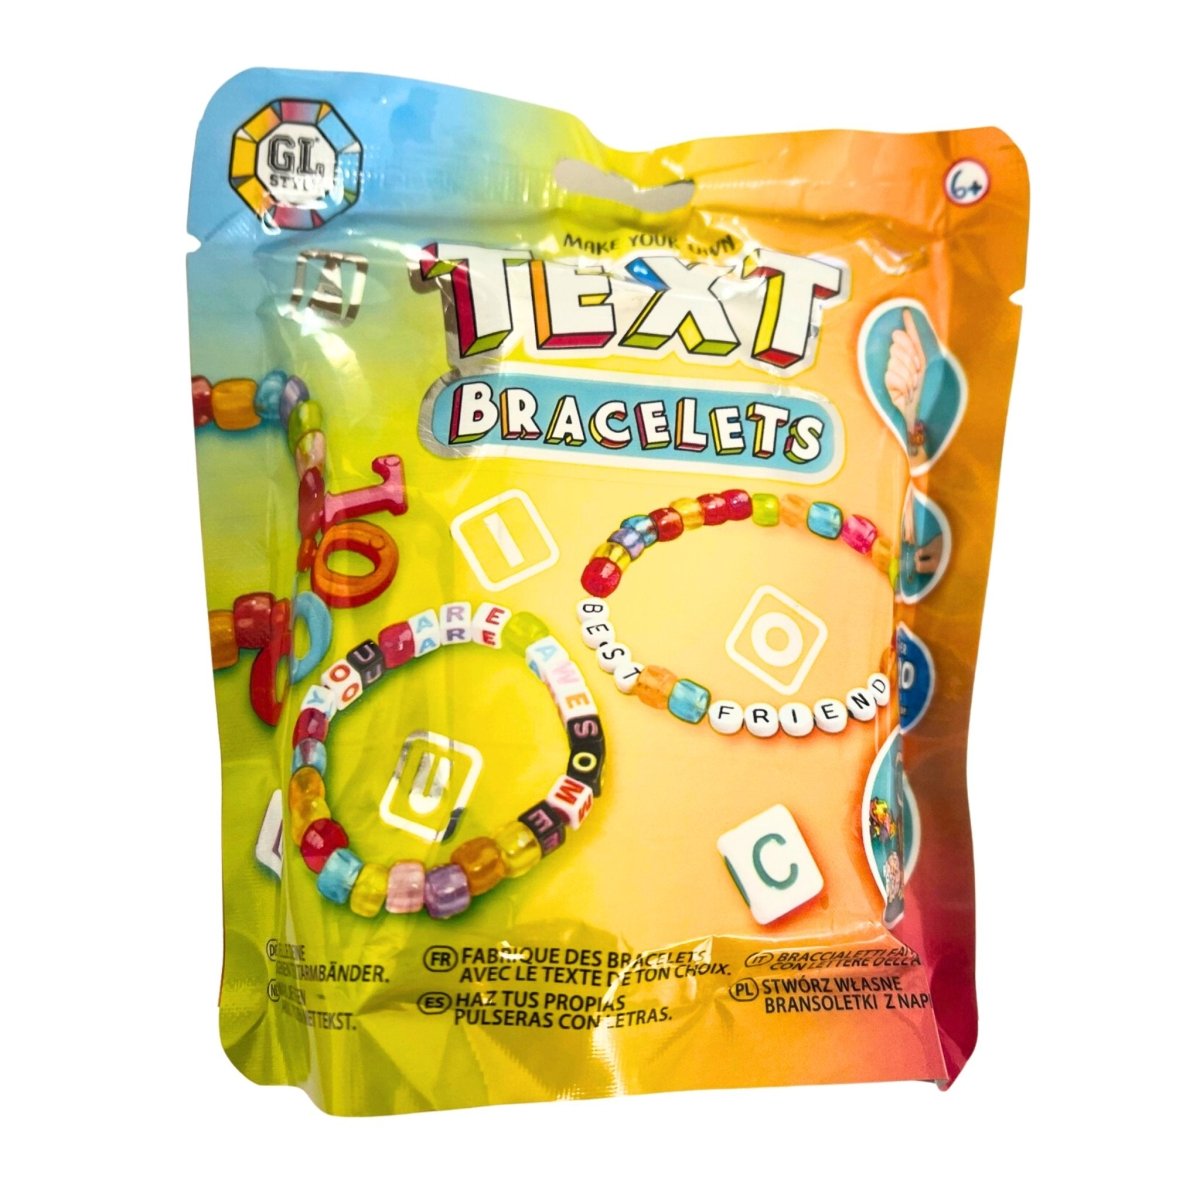 Make Your Own Text Bracelets Surprise Bag - Kids Party Craft